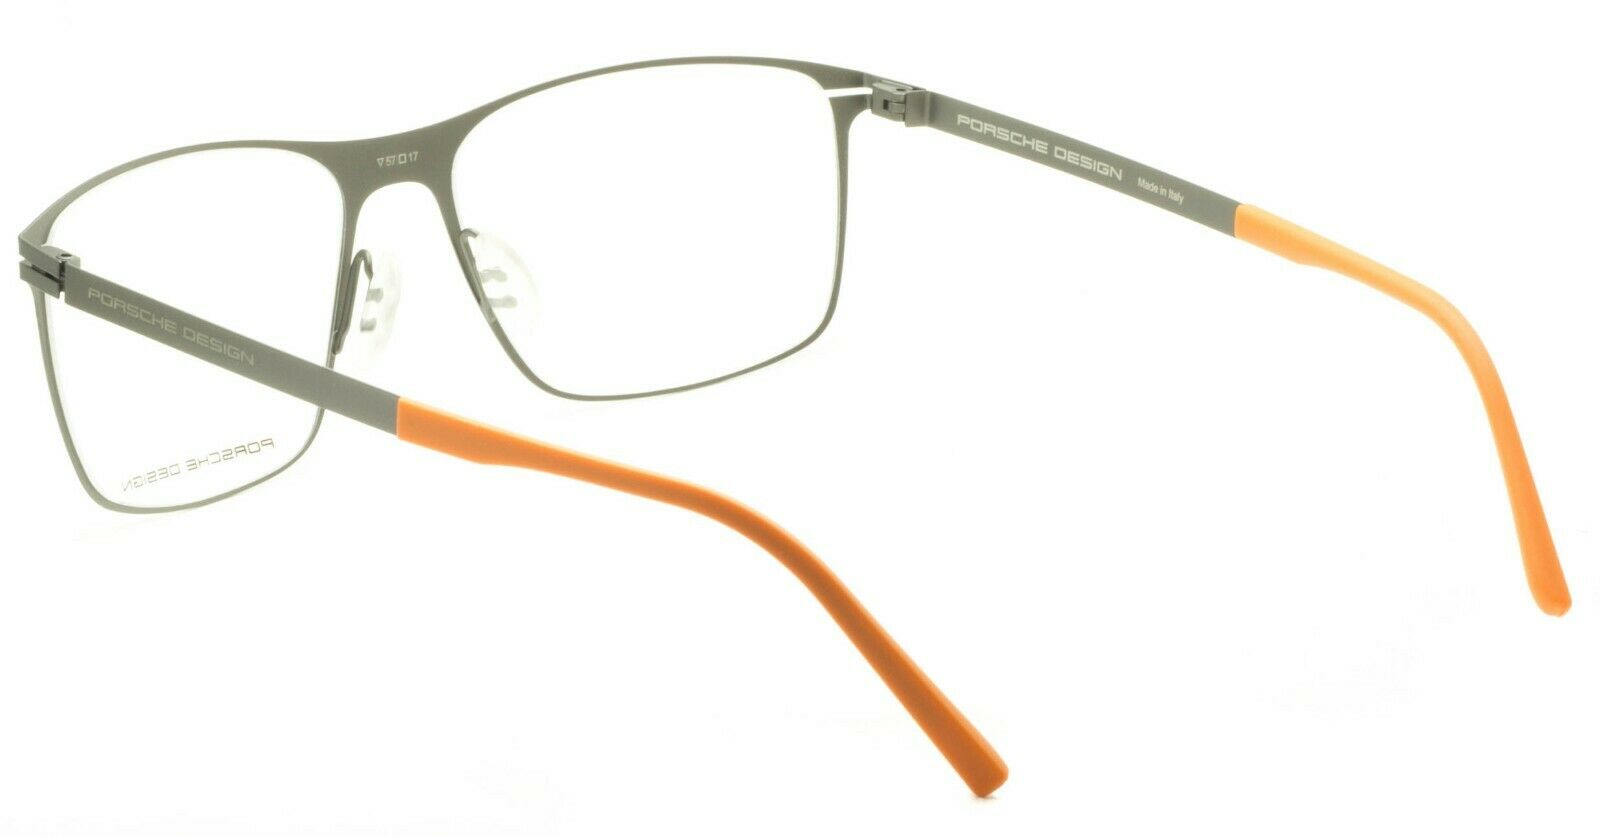 PORSCHE DESIGN P8256 C 57mm Eyewear RX Optical FRAMES Glasses Eyeglasses - Italy